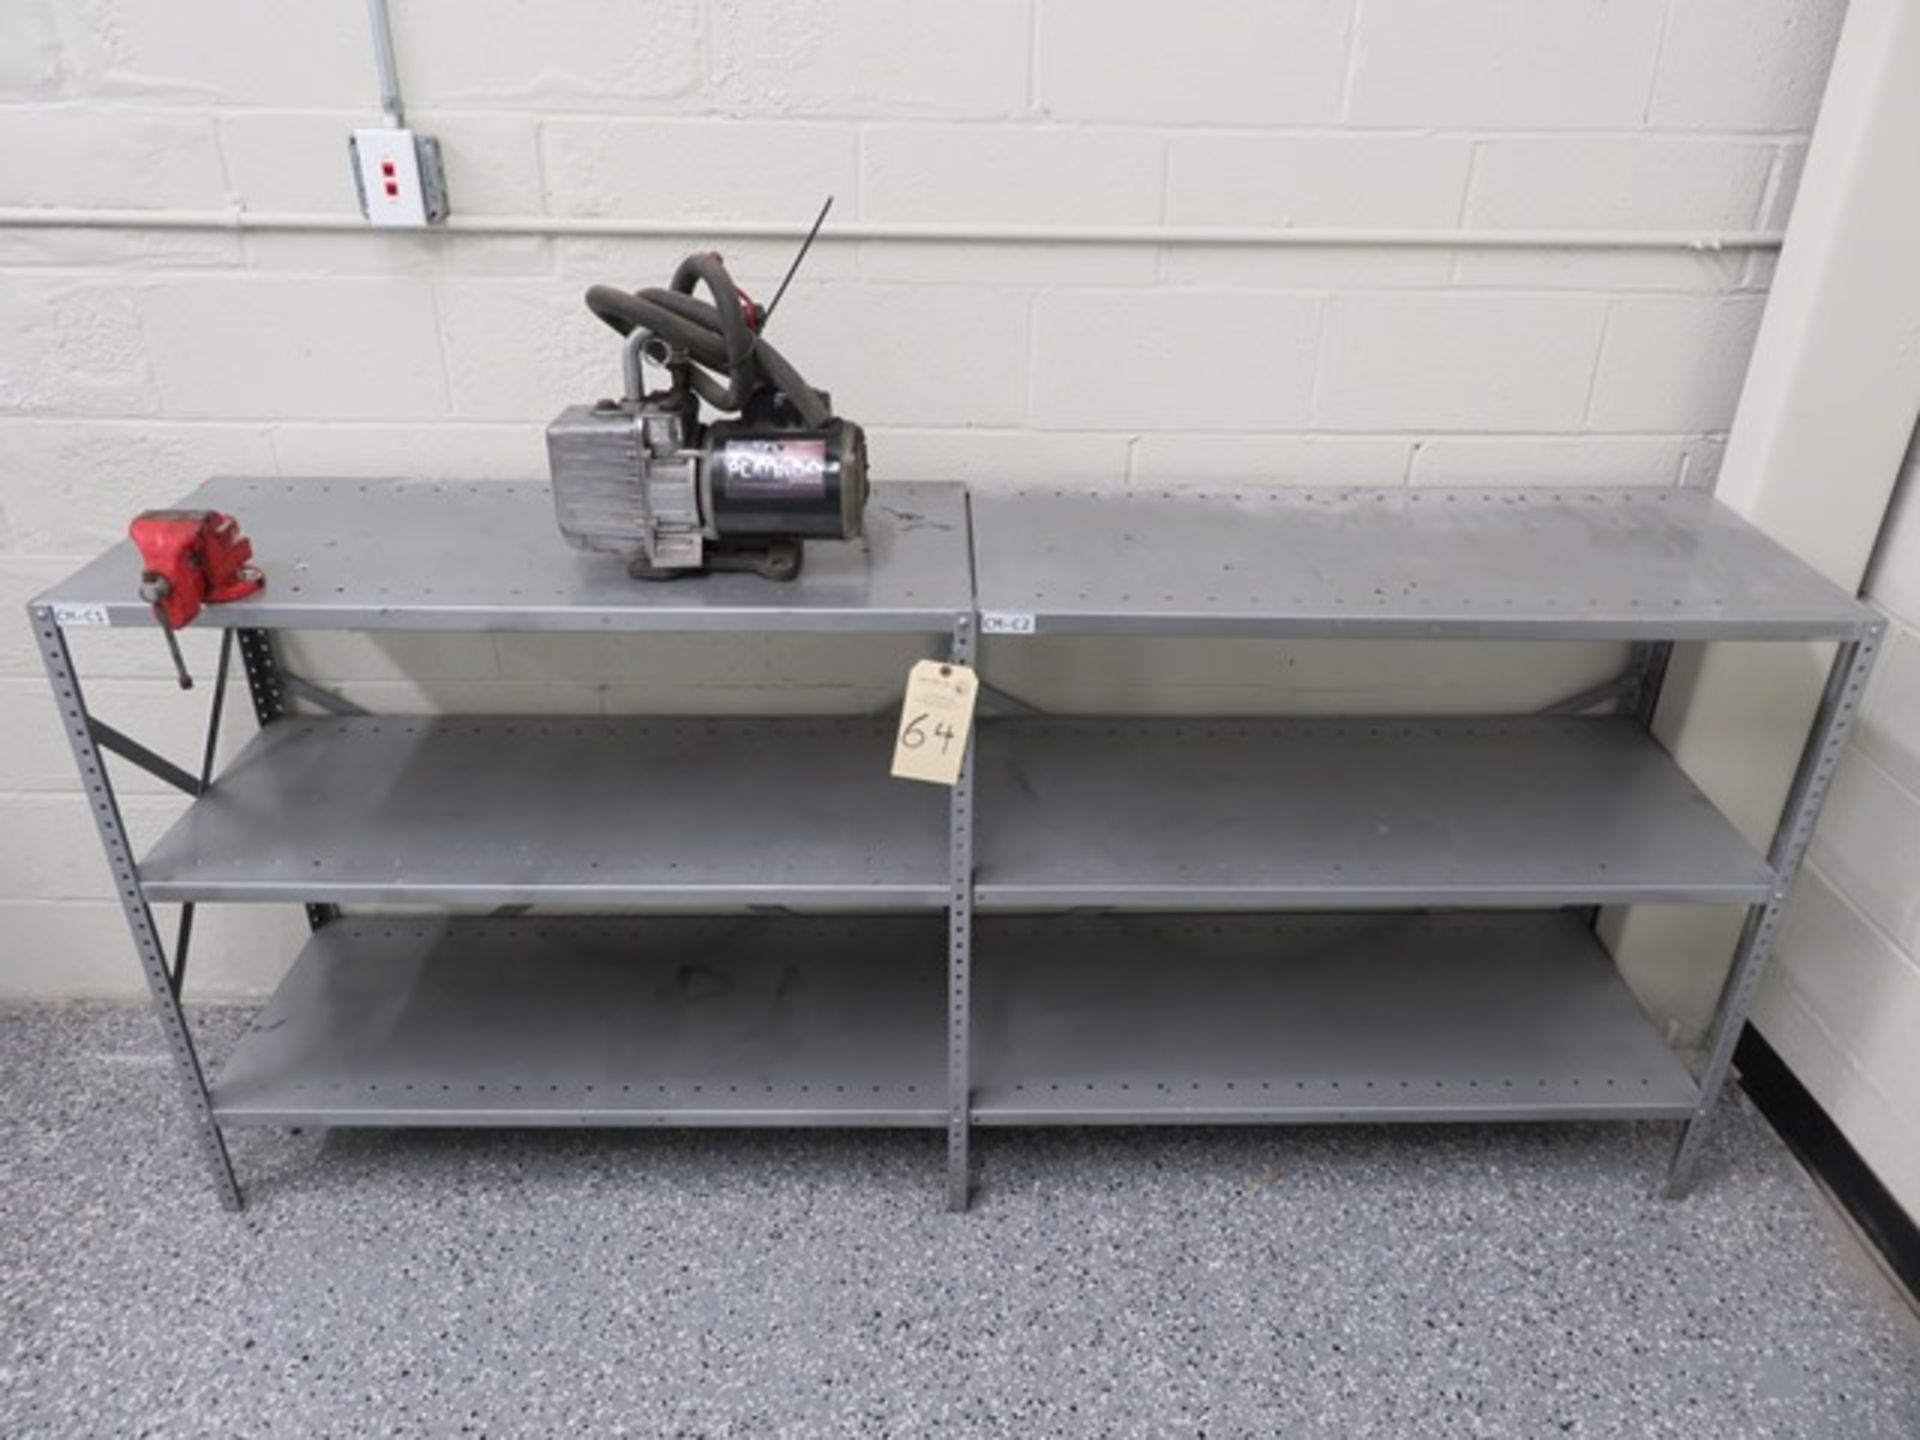 Steel Shelf with Japan 4'' Bench Vise, JB Industries DV-200N 7 CFM Pump